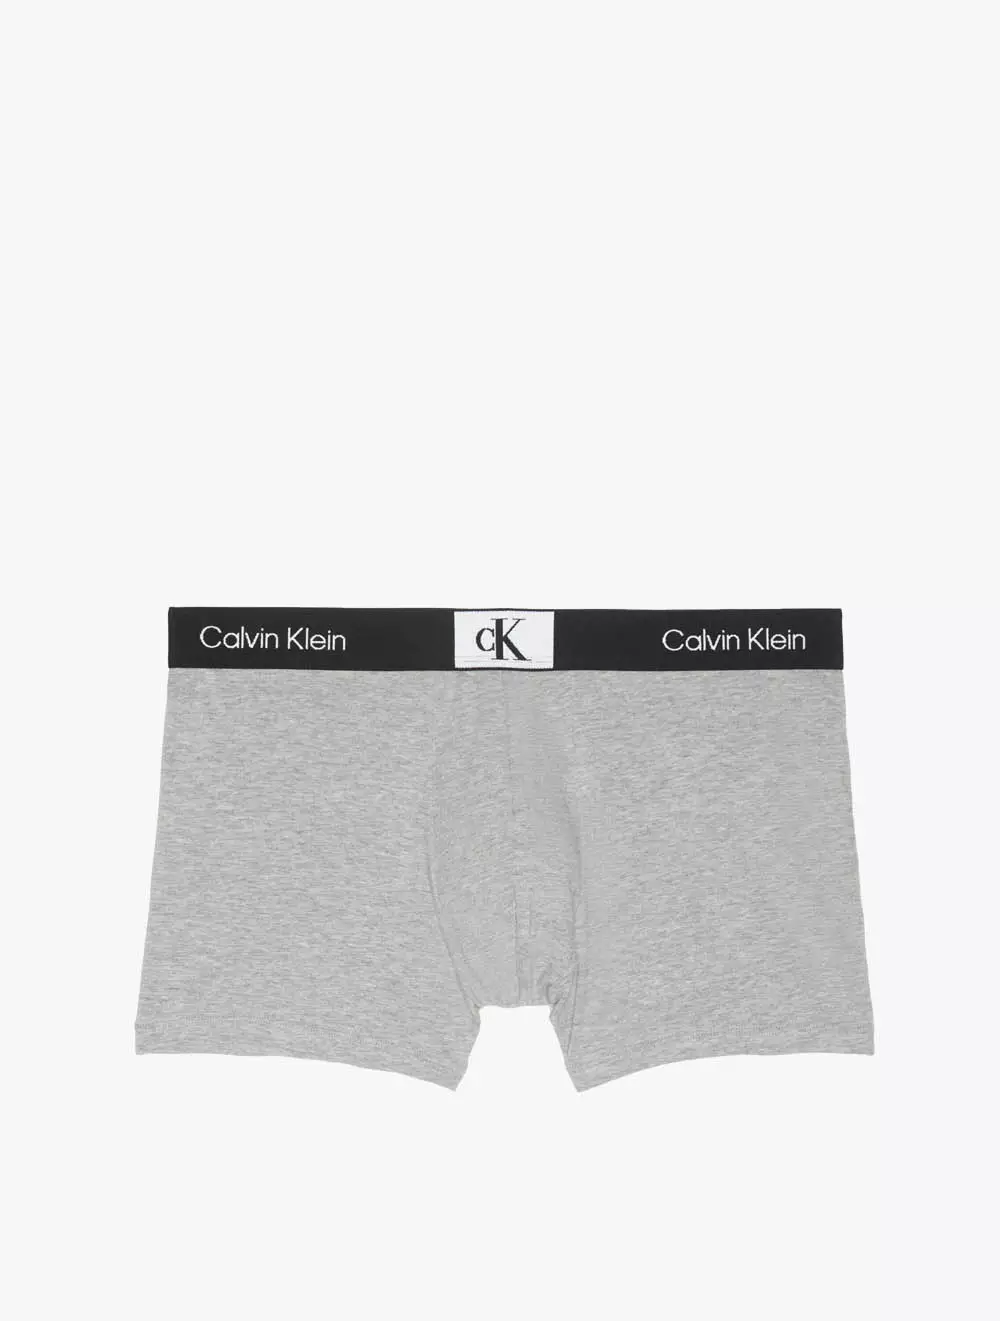 Calvin Klein 1996 Trunks